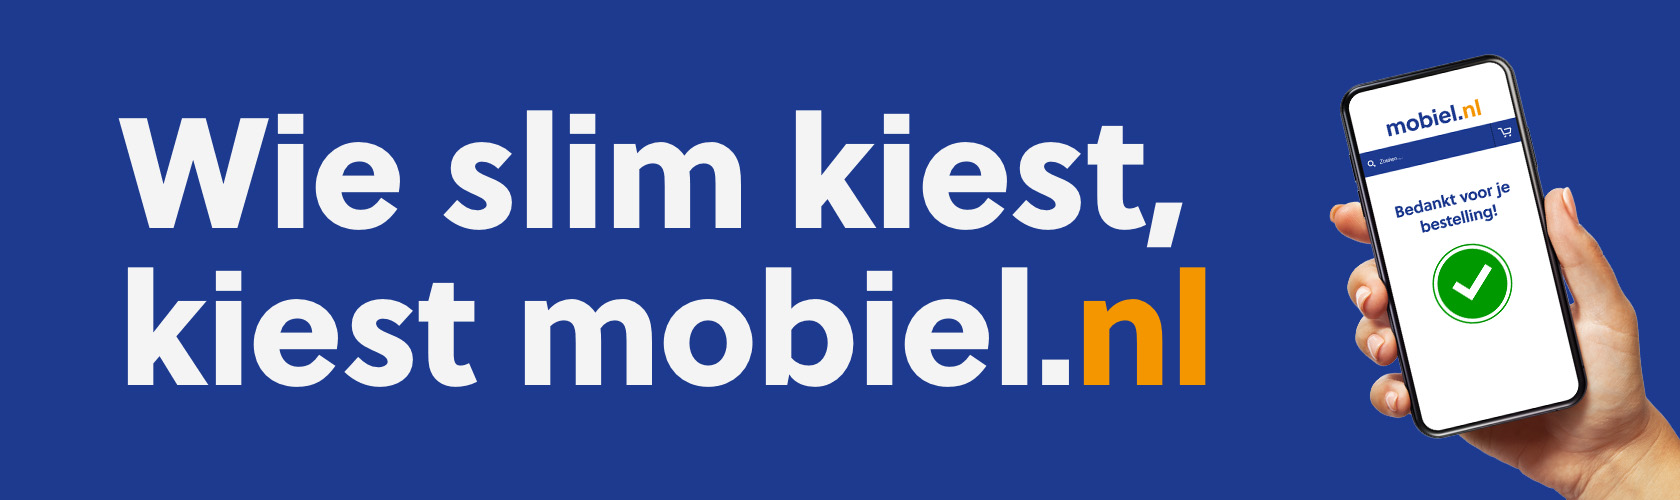 Mobiel.nl - telefoons en mobiele abonnementen